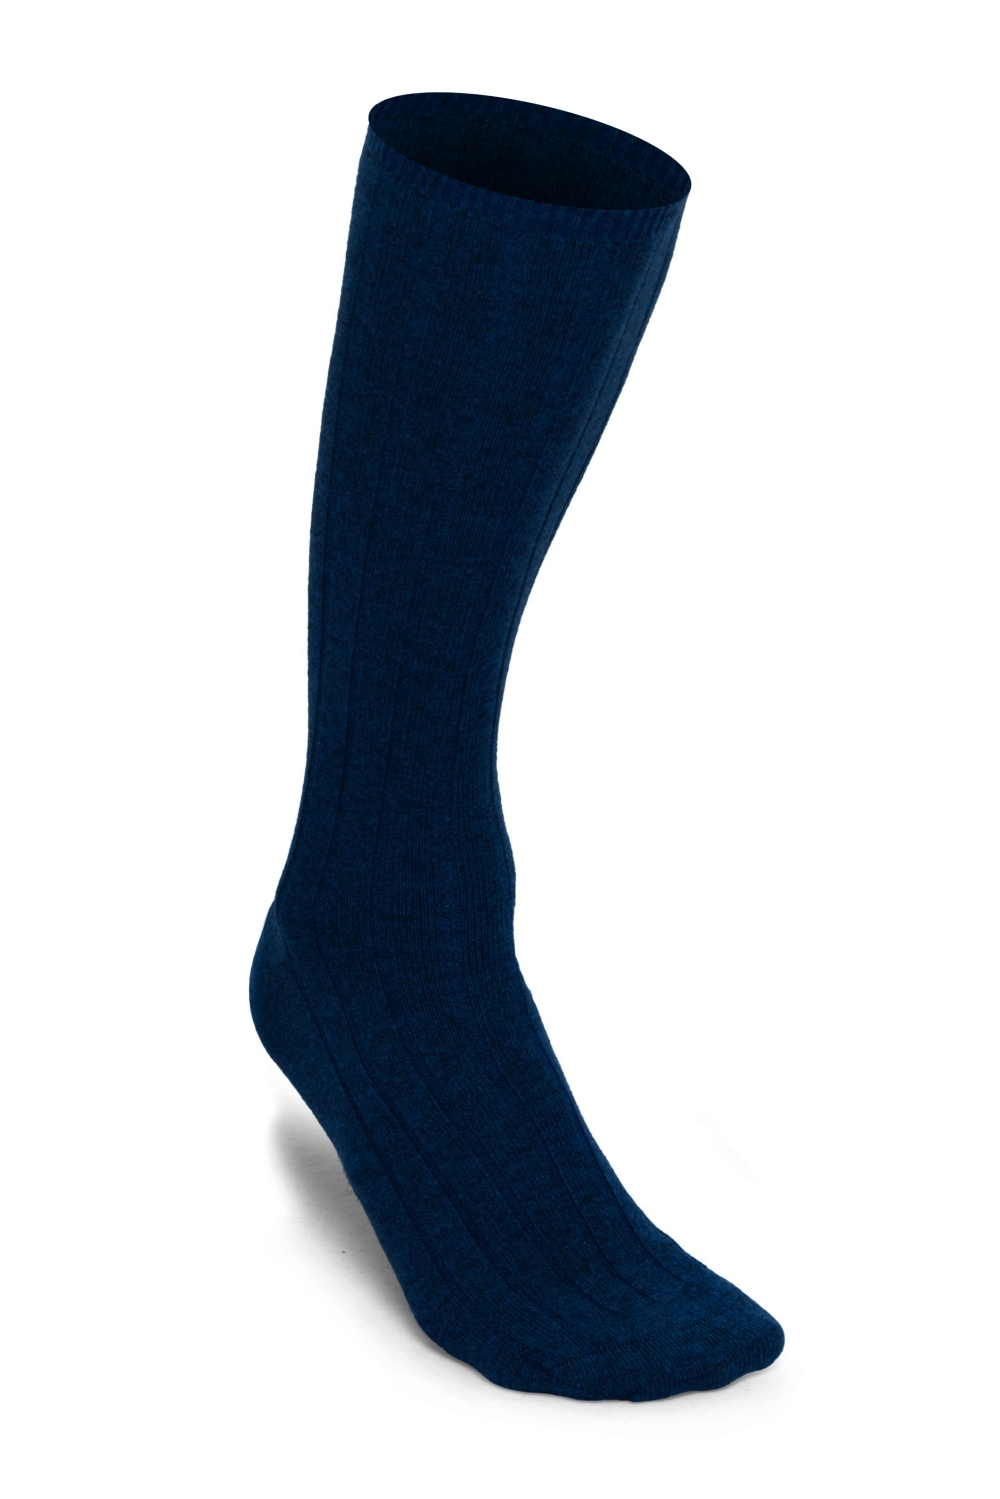 Cashmere accessories socks dragibus long m dress blue 5 5 8 39 42 